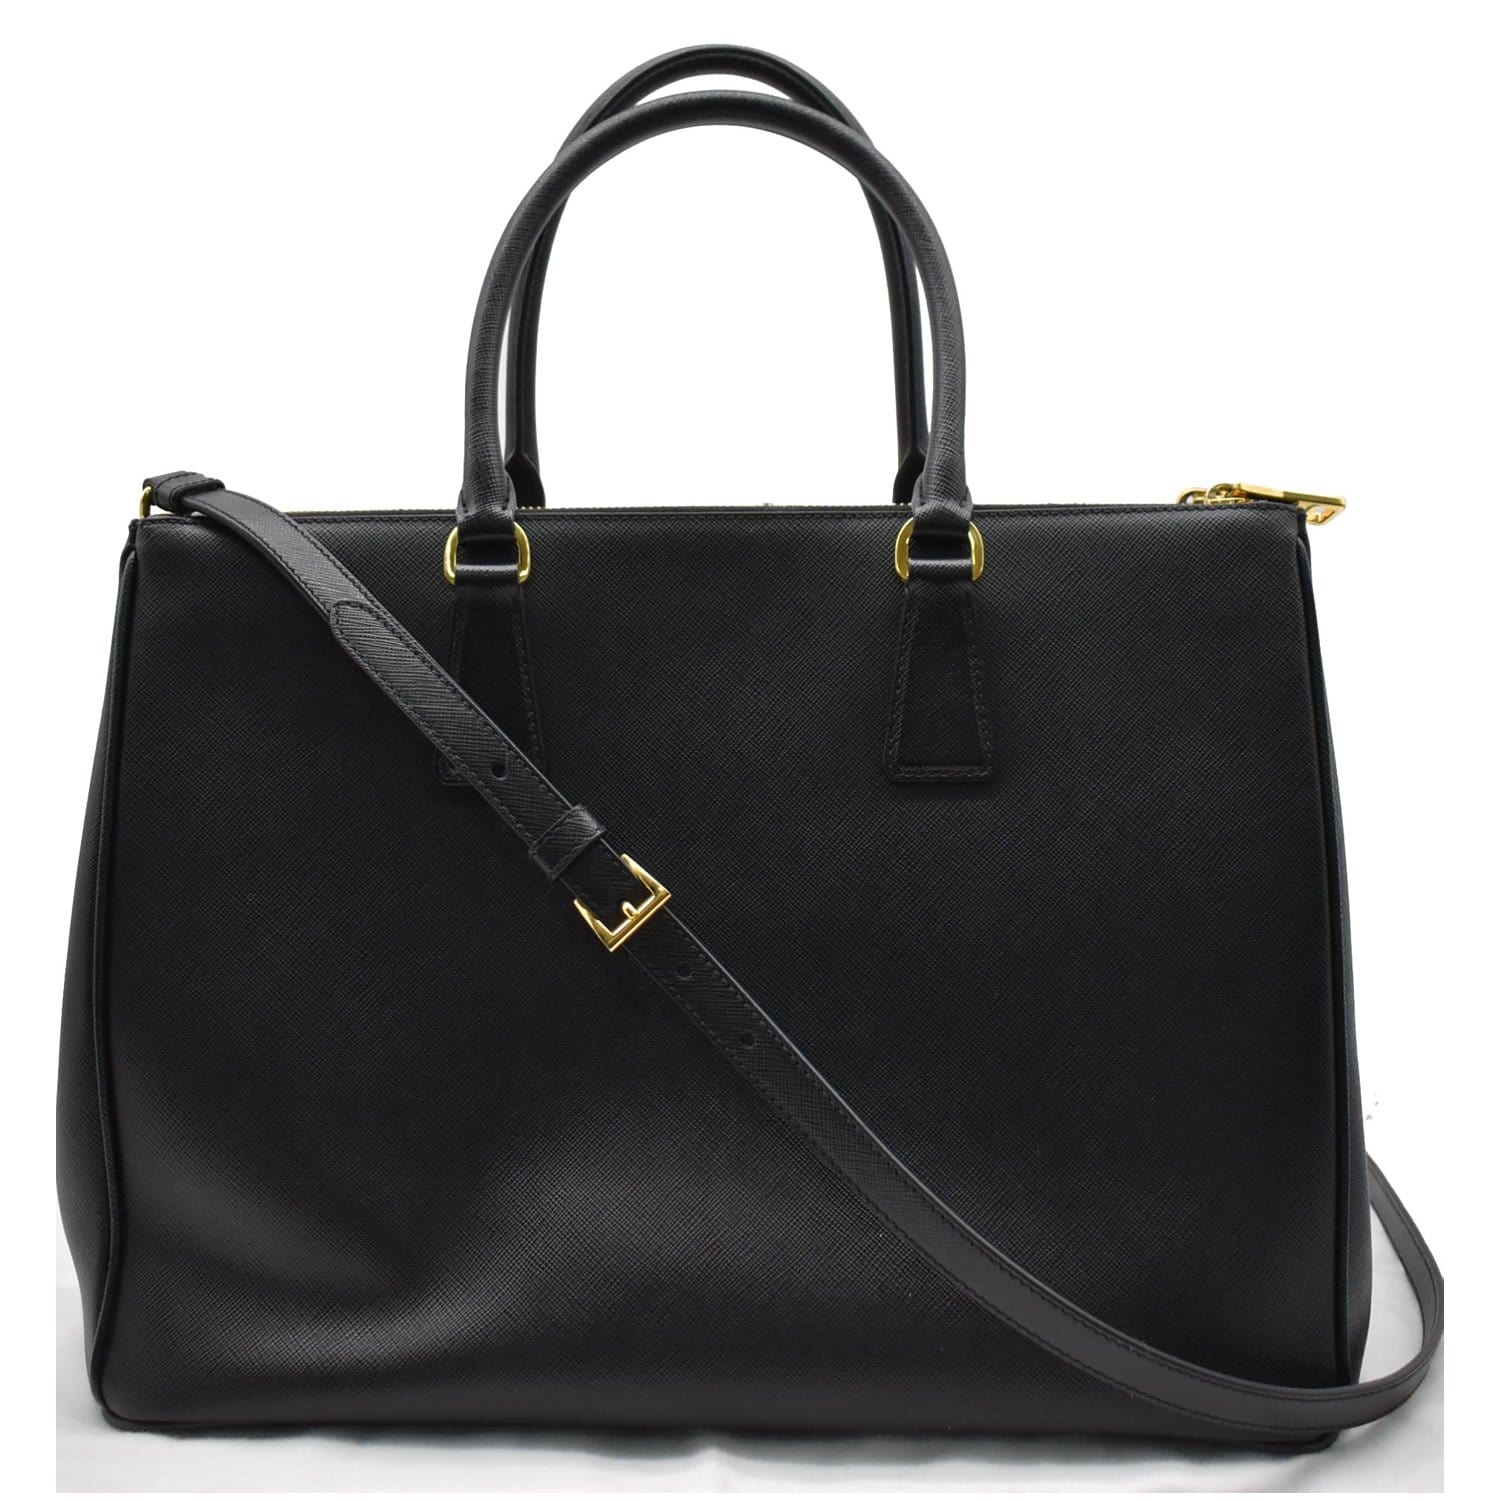 Prada Galleria Saffiano leather large bag